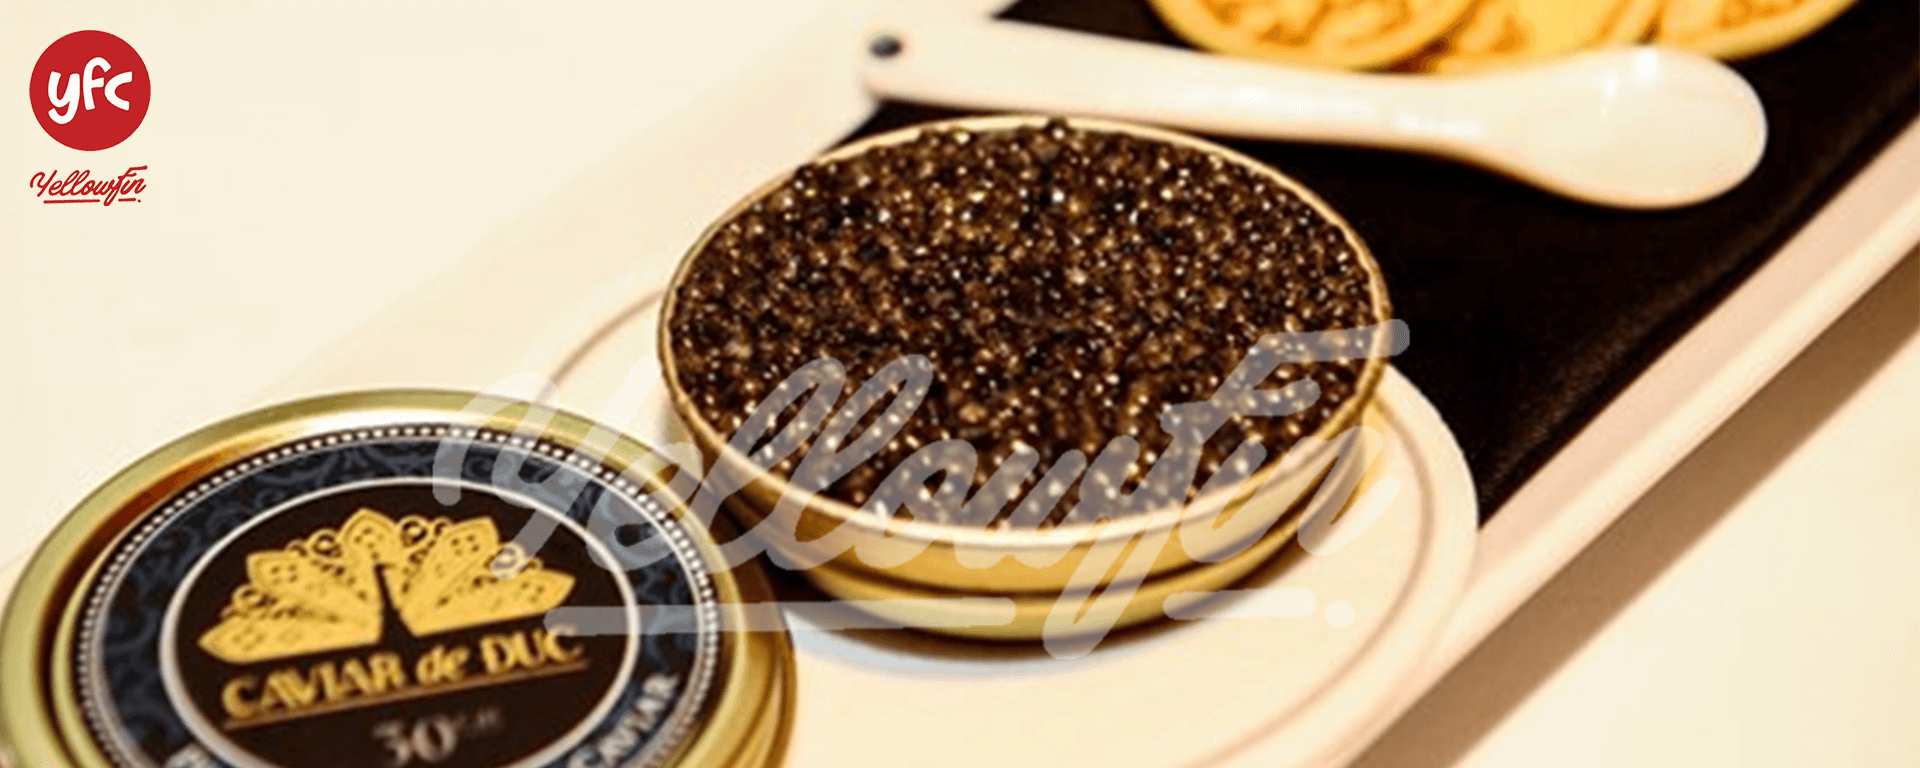 Trứng cá tầm Caviar De Duc yfc